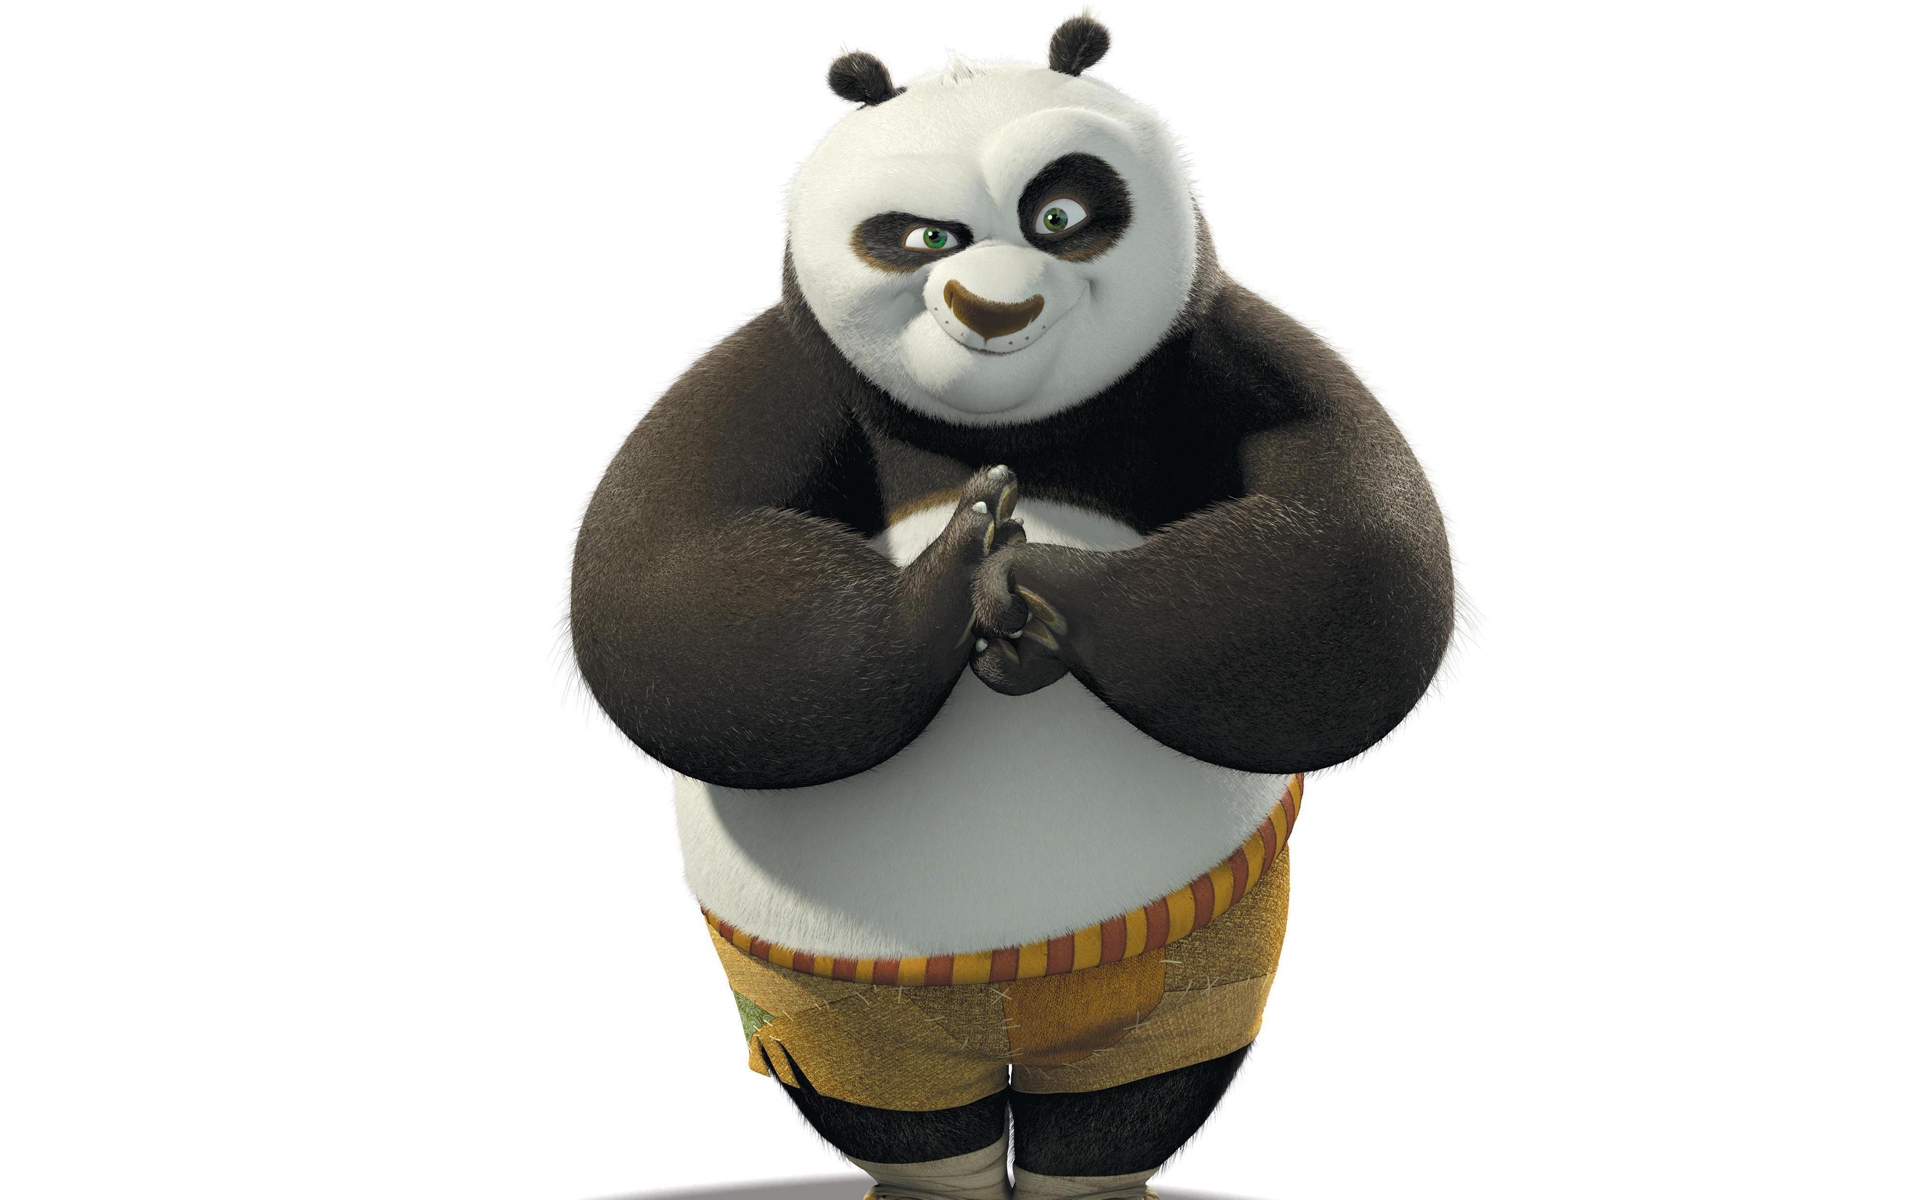 Baixar papéis de parede de desktop Kung Fu Panda HD